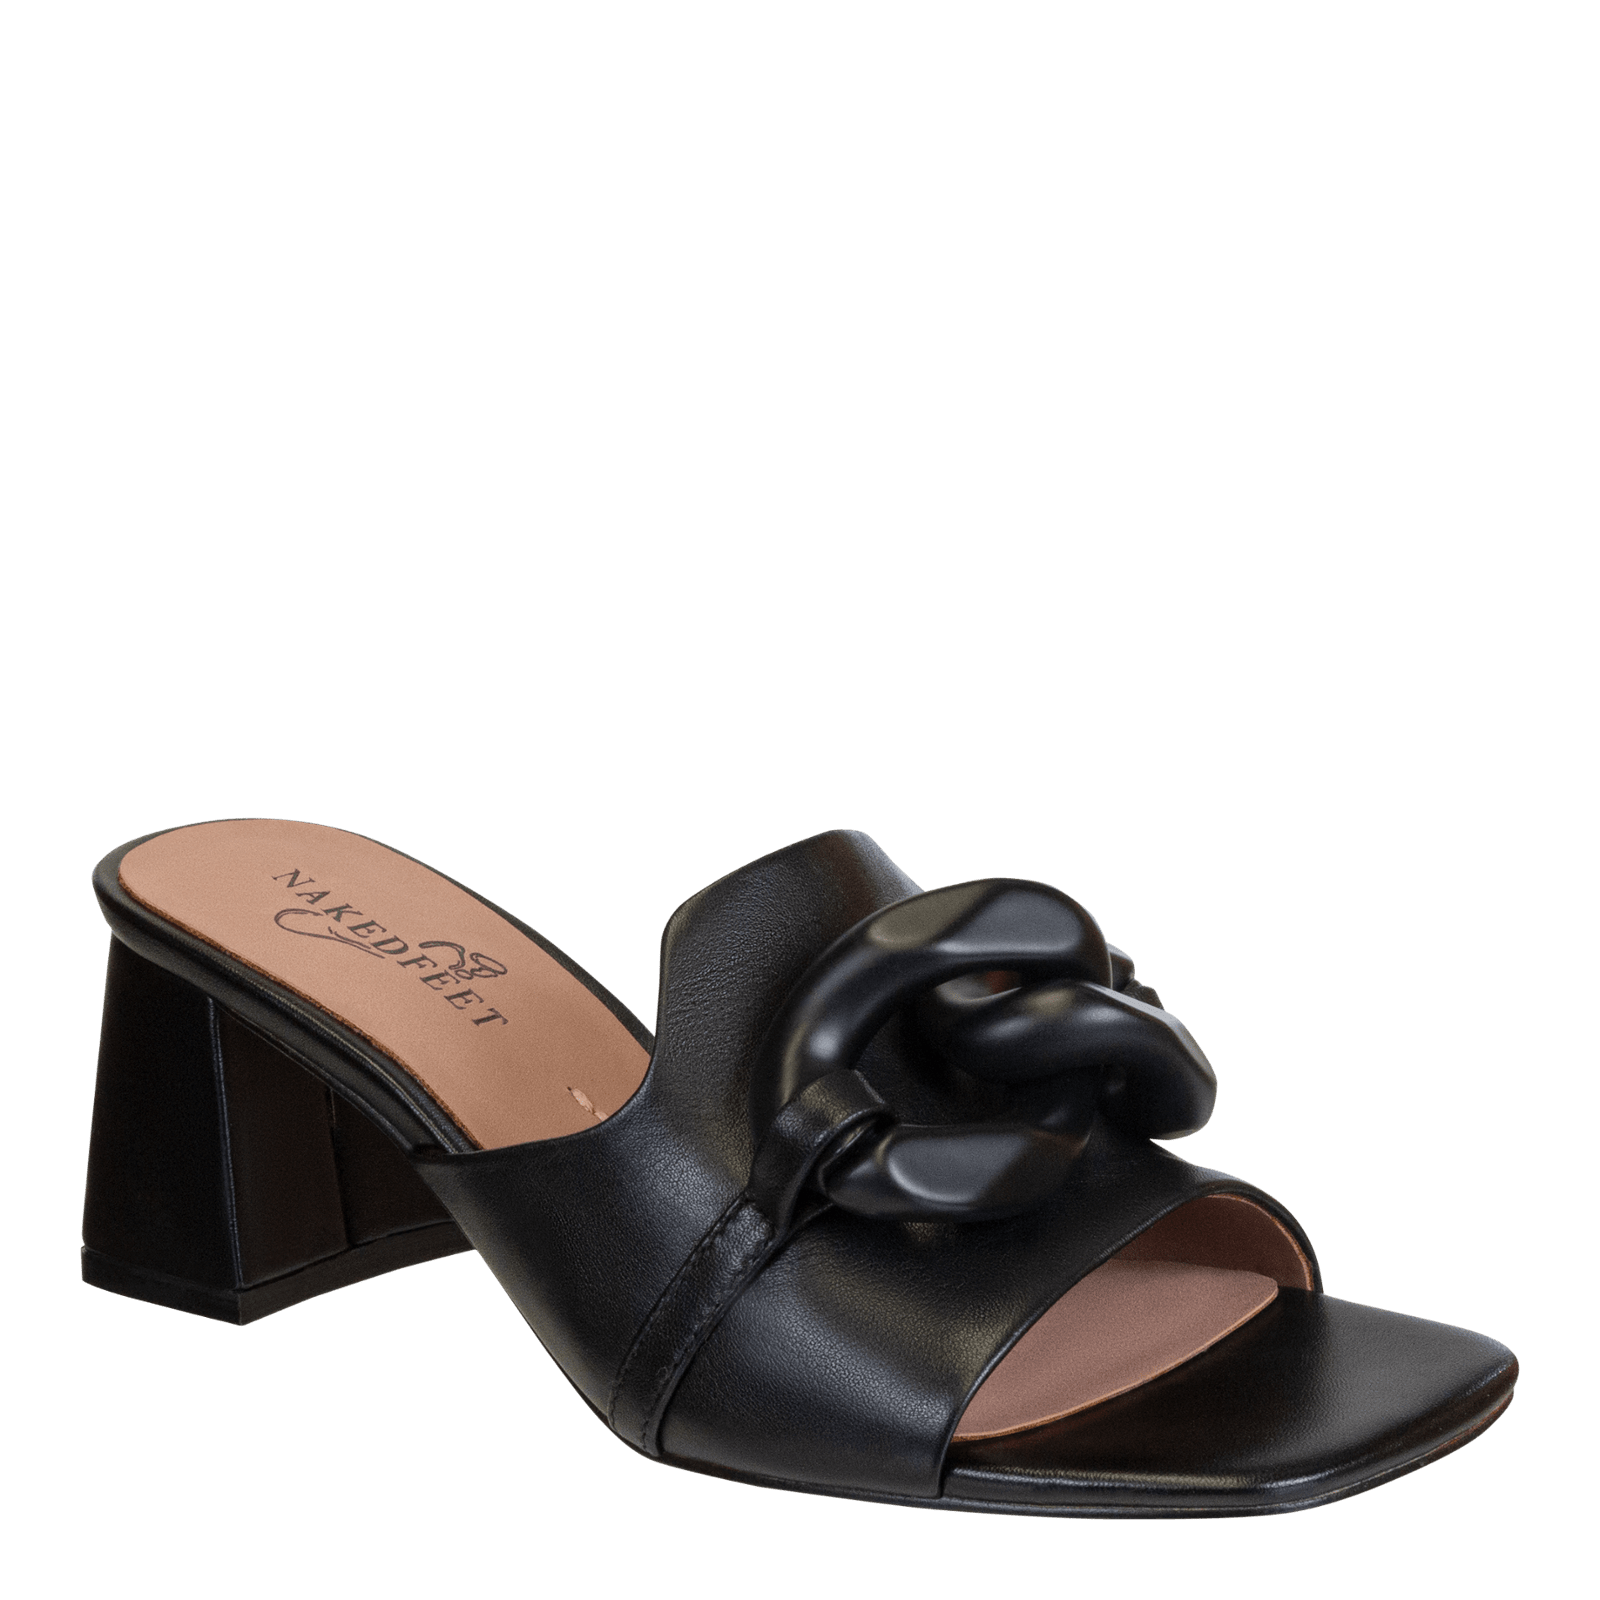 NAKED FEET - COTERIE in BLACK Heeled Sandals WOMEN FOOTWEAR NAKED FEET 